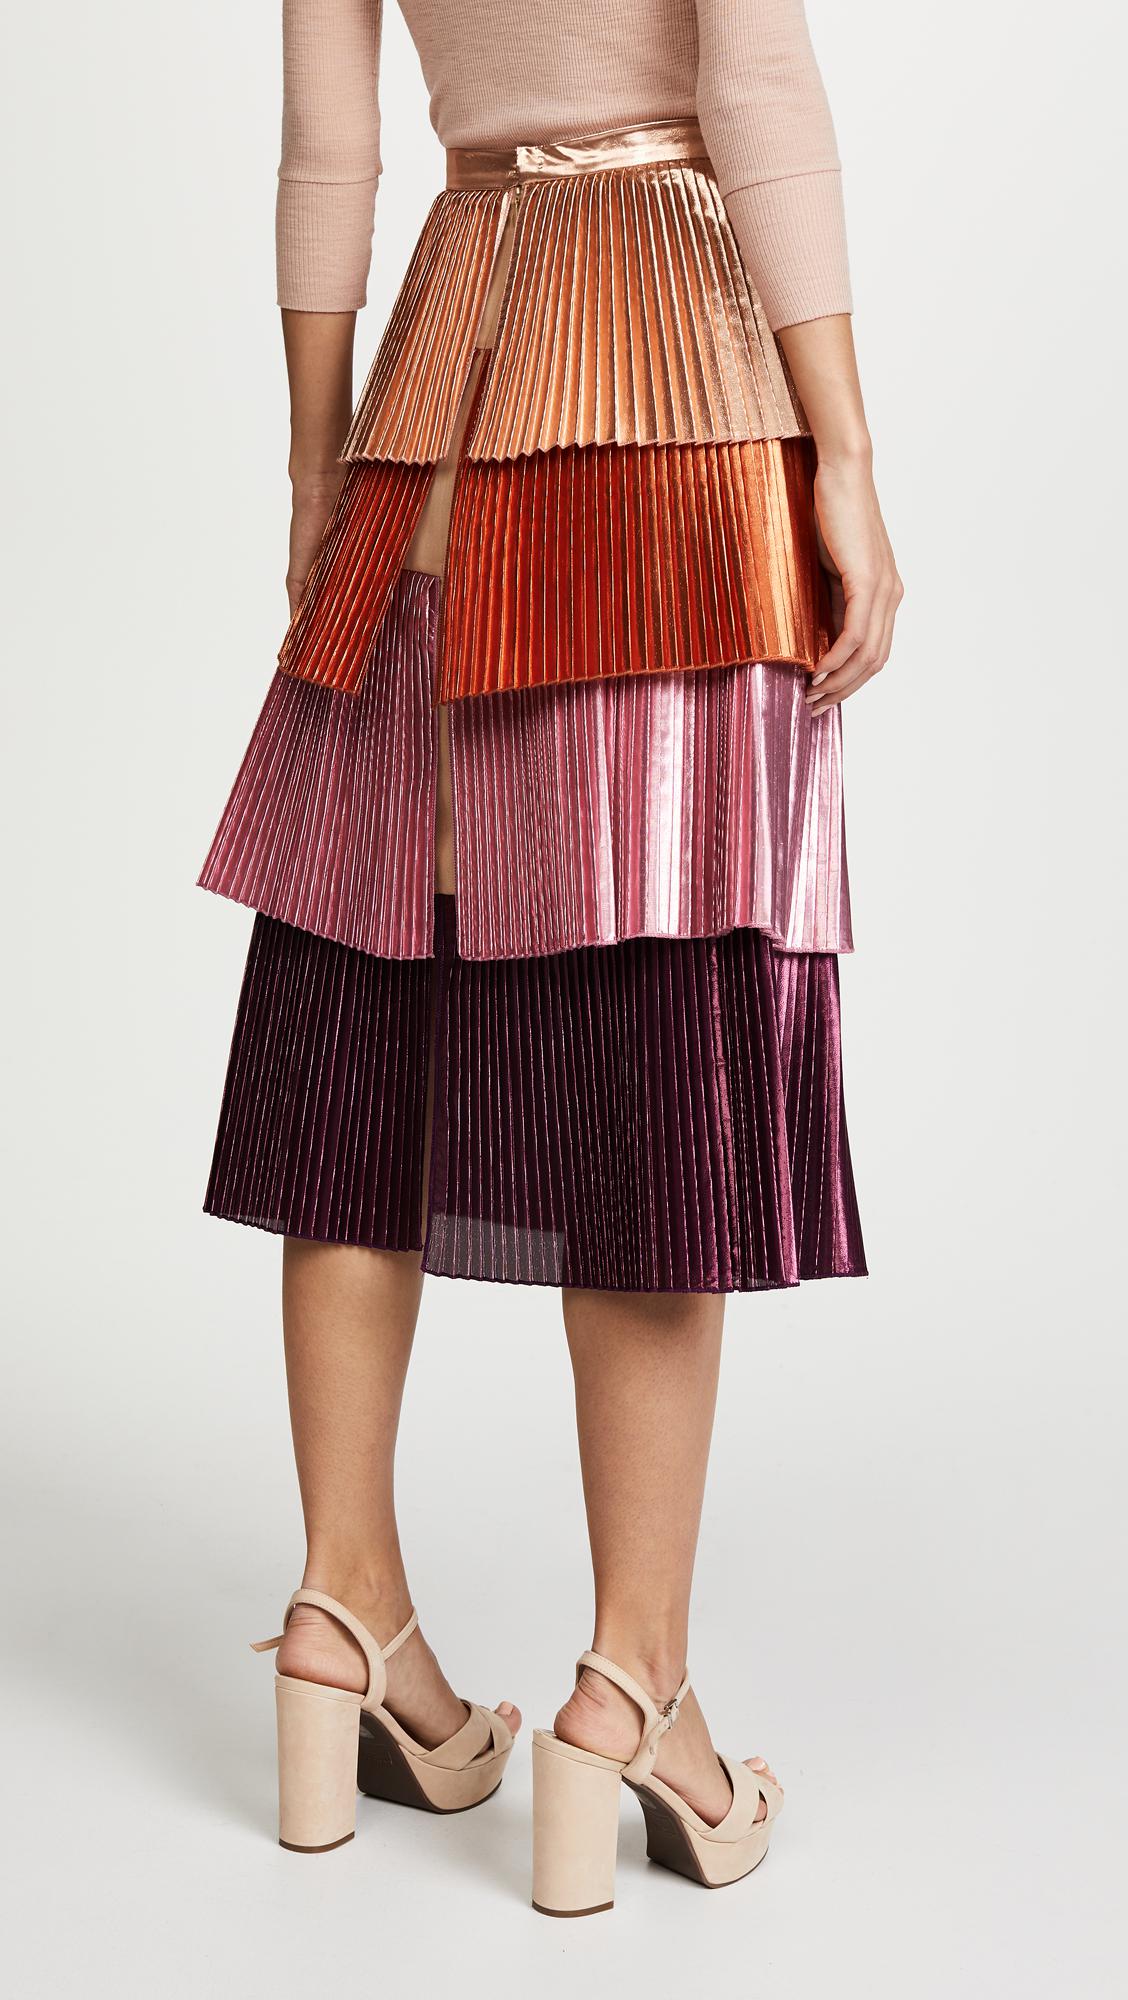 DELFI Collective Synthetic Lauren Skirt in Pink - Lyst